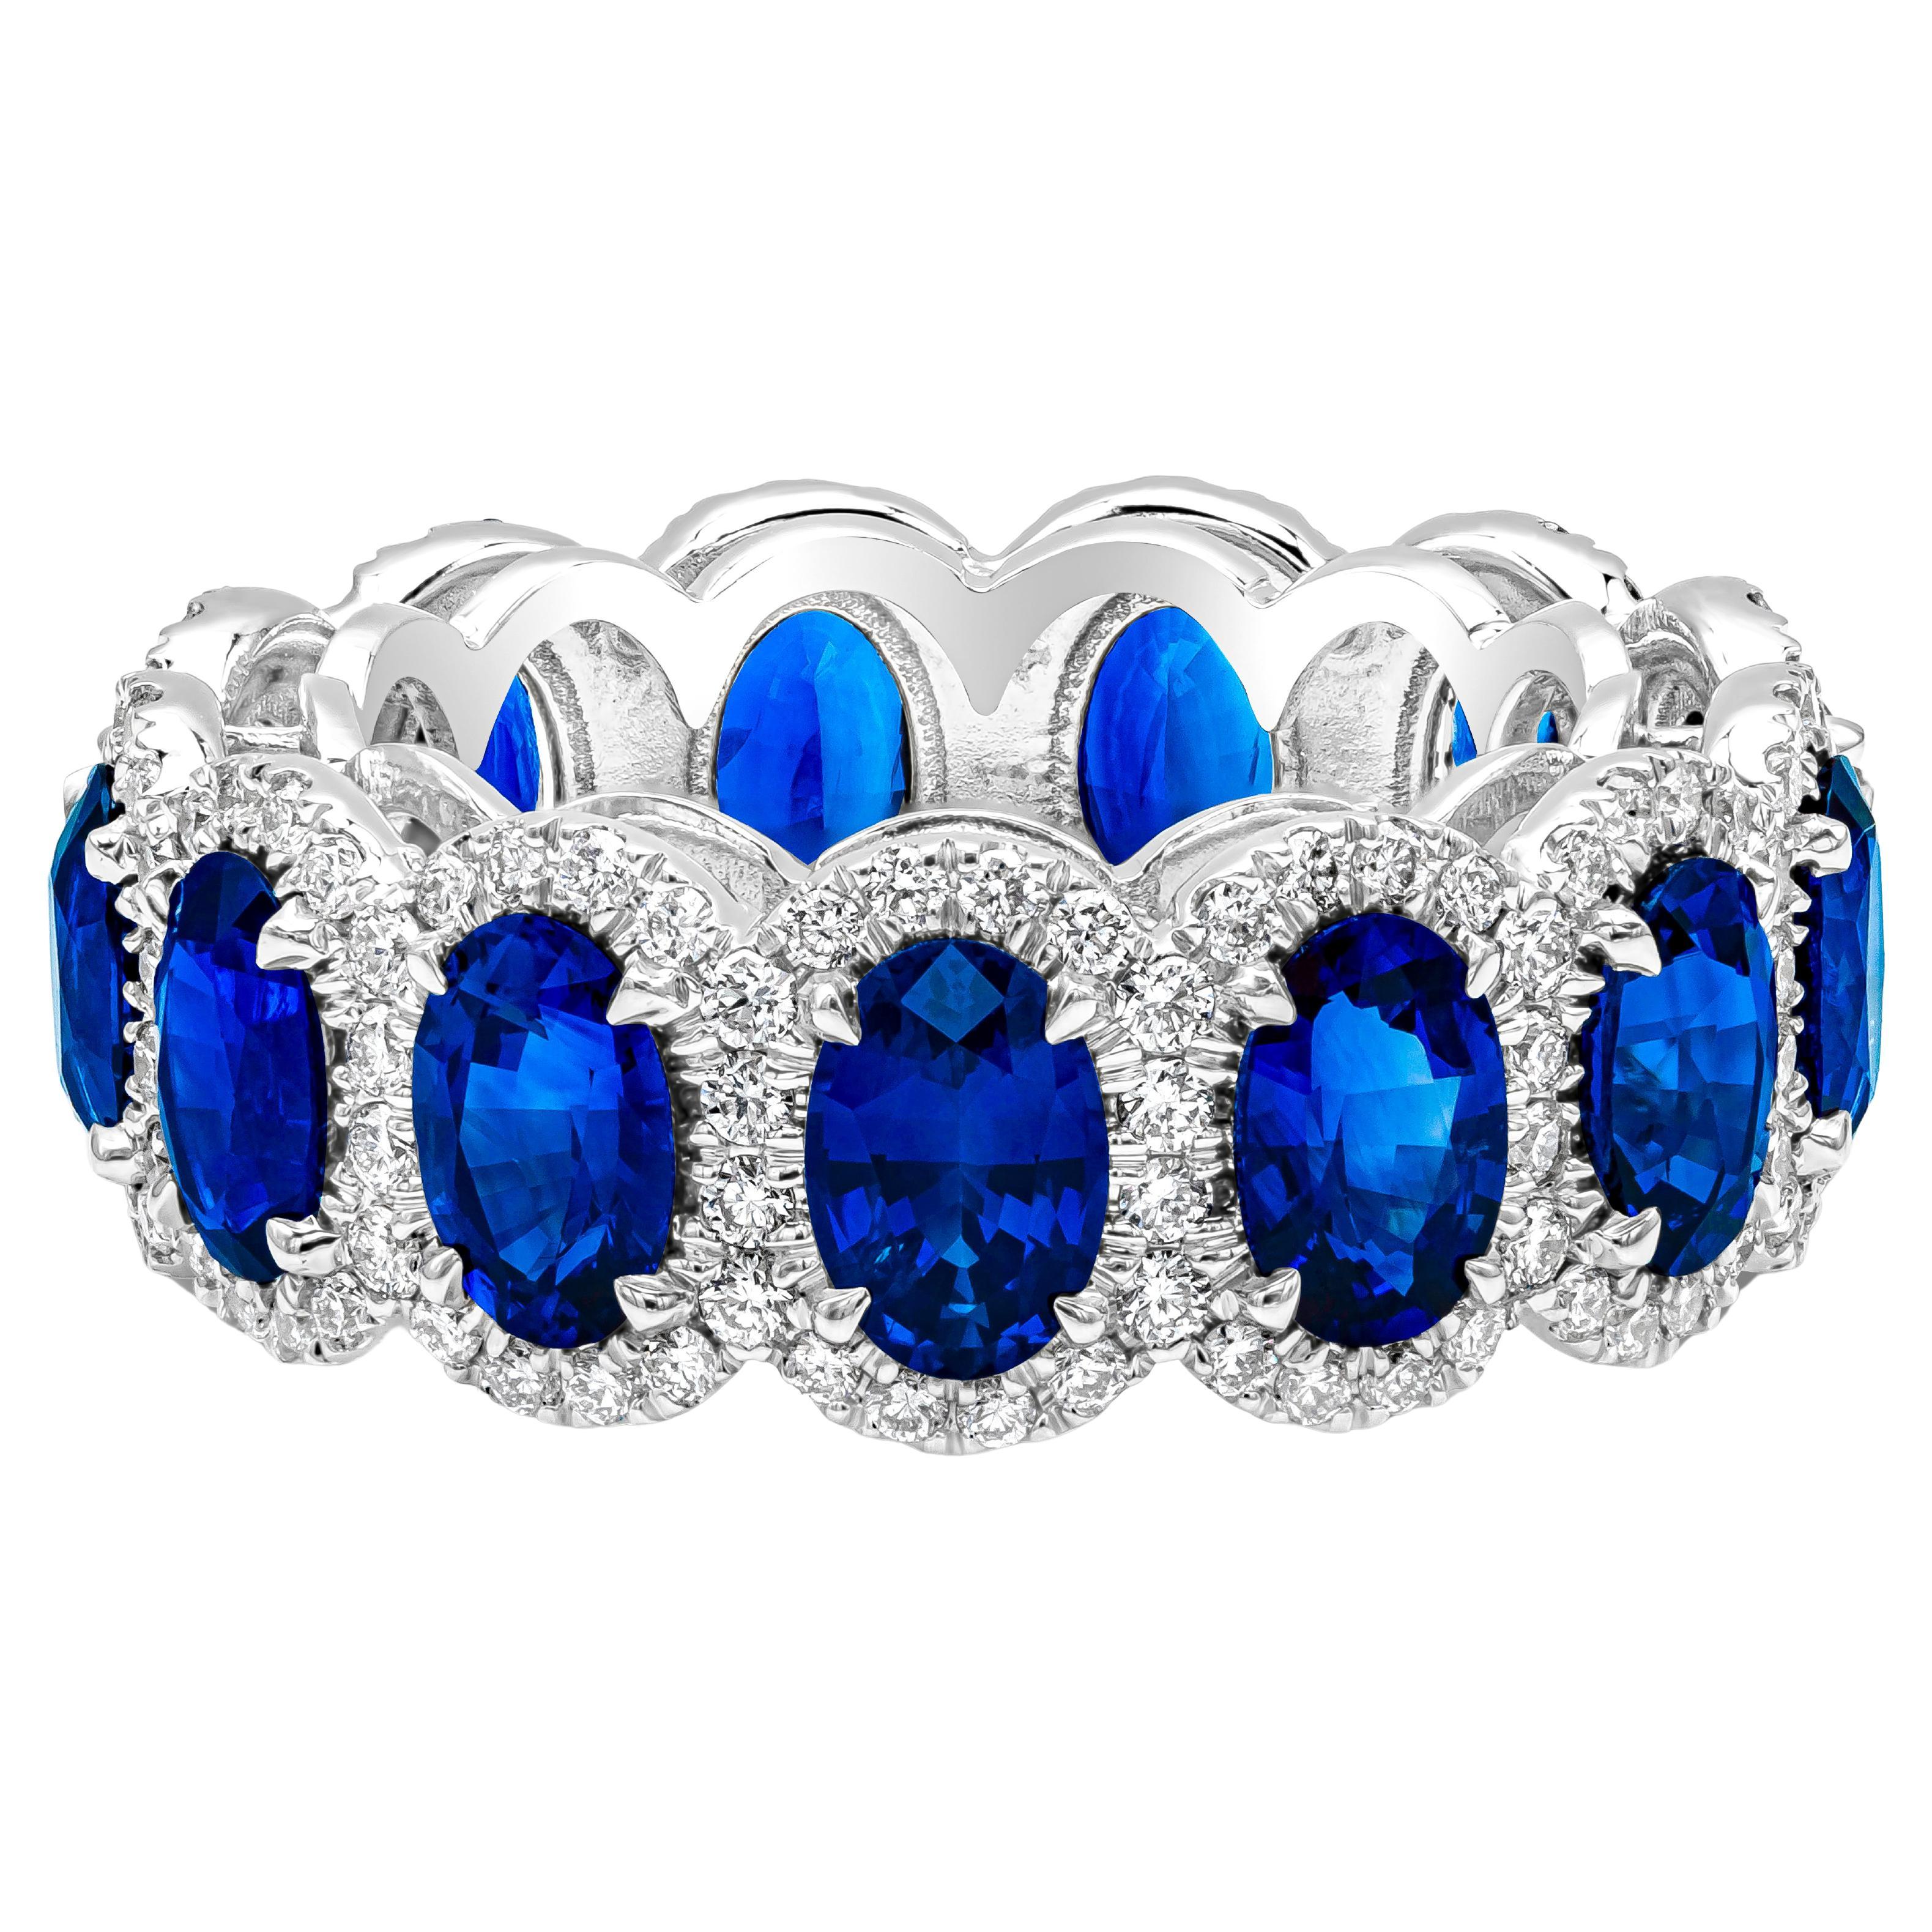 Roman Malakov 7.18 Carat Oval Cut Blue Sapphire Halo Eternity Wedding Band Ring